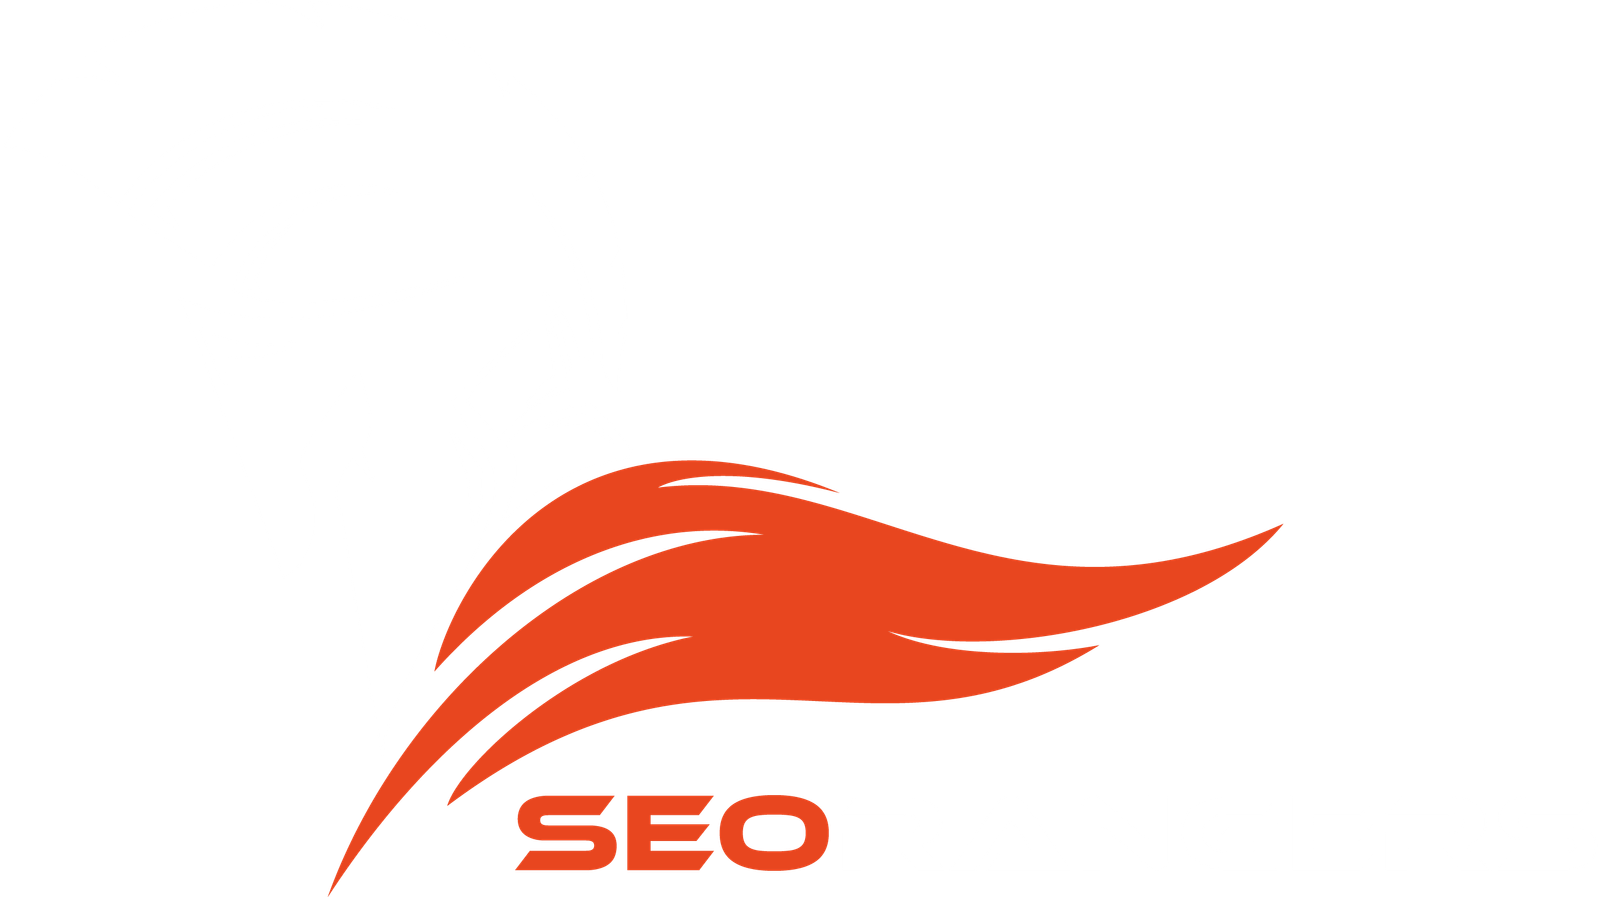 SEO Rangers logo